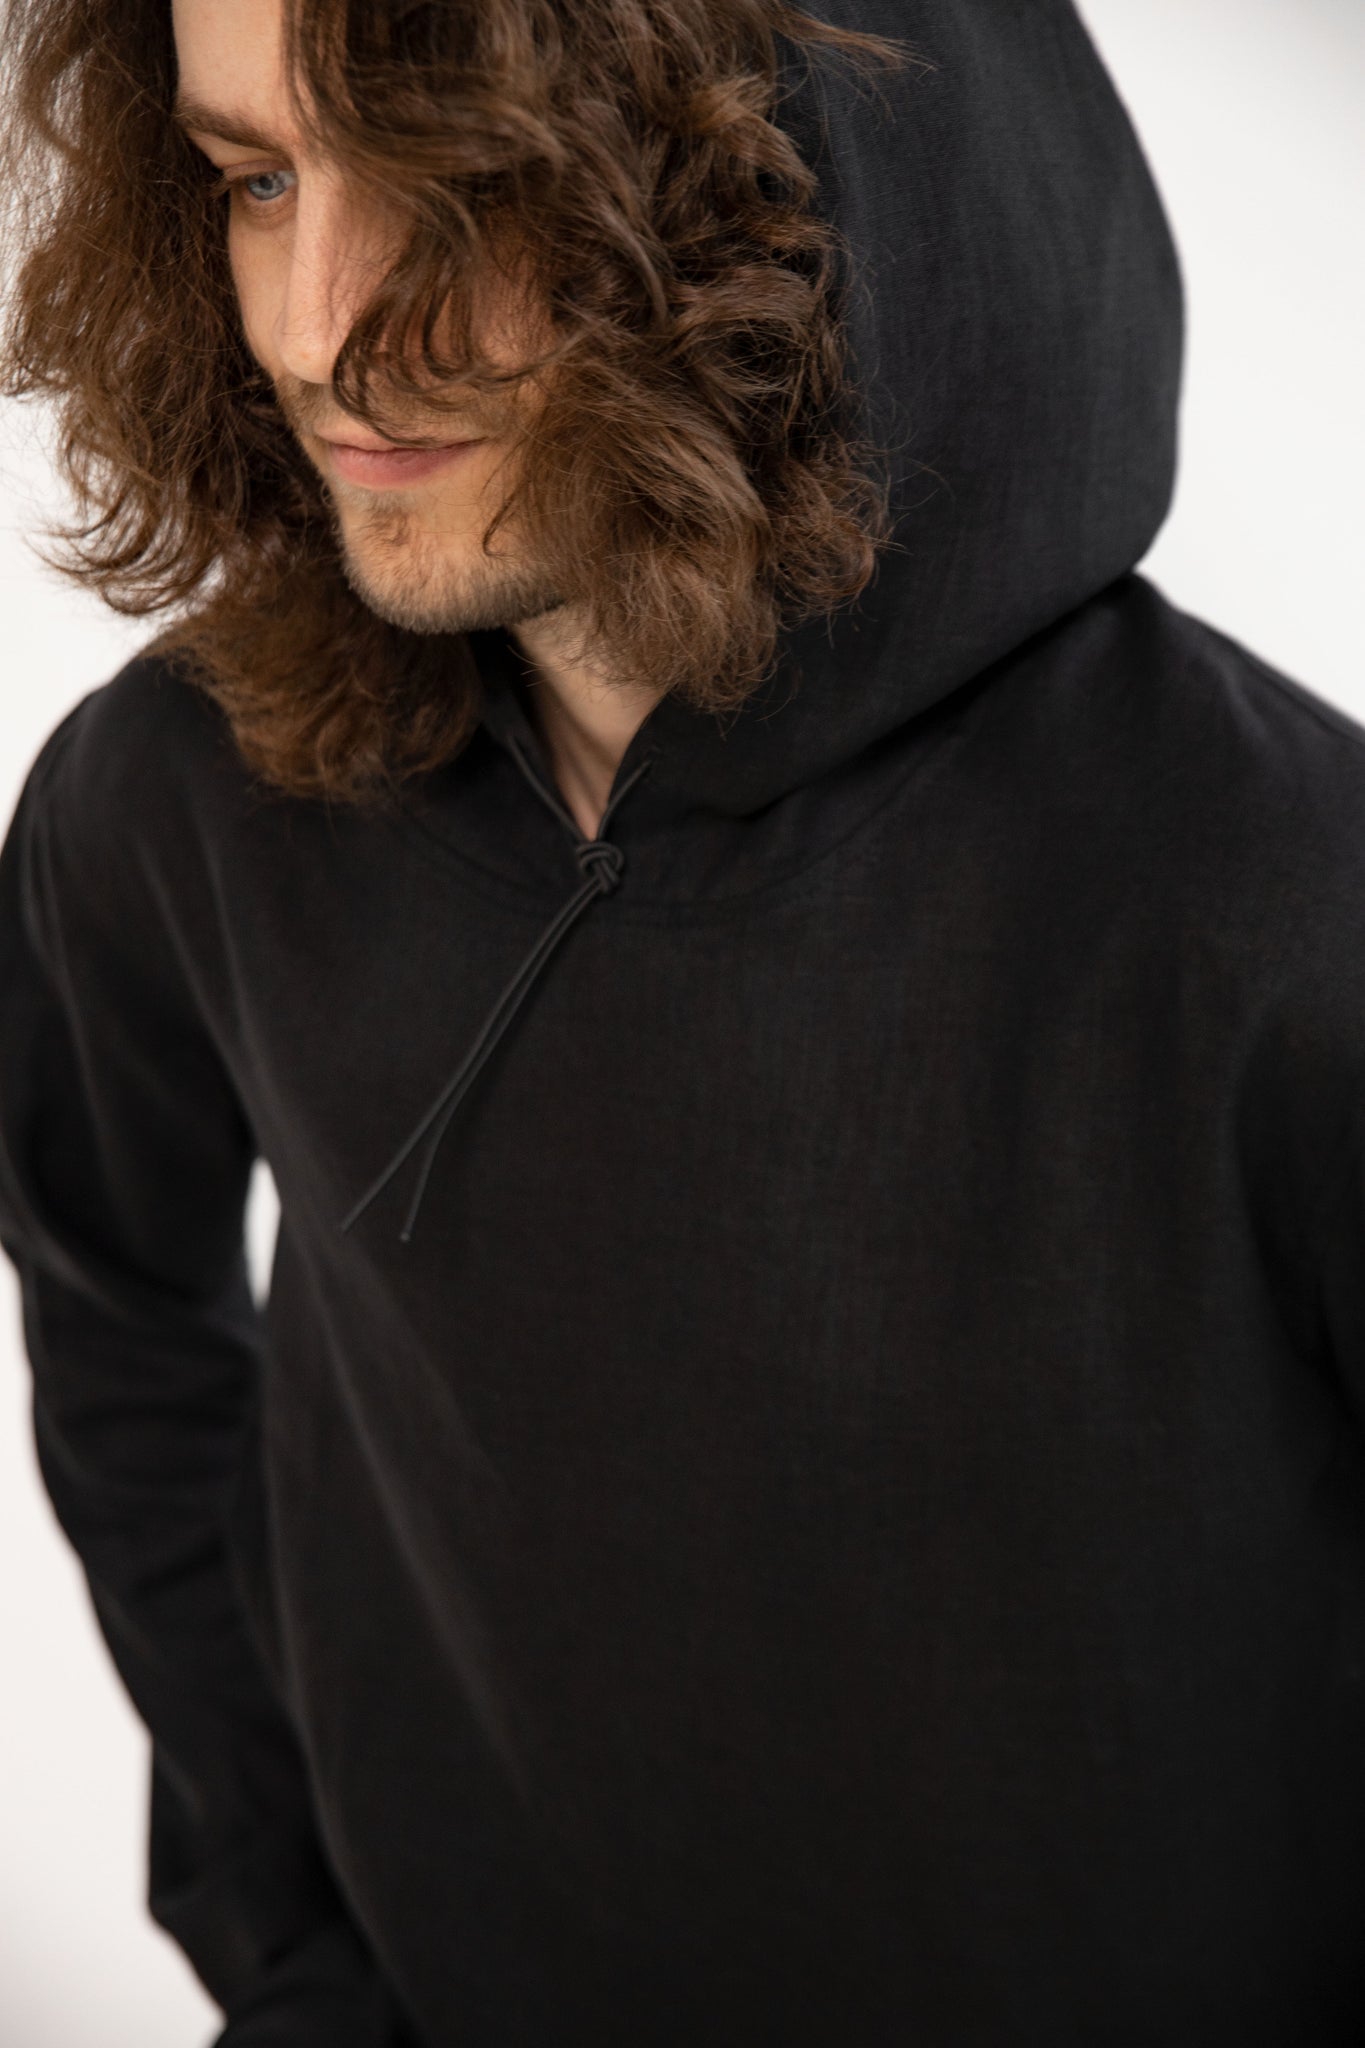 Unisex linen hoodie black.